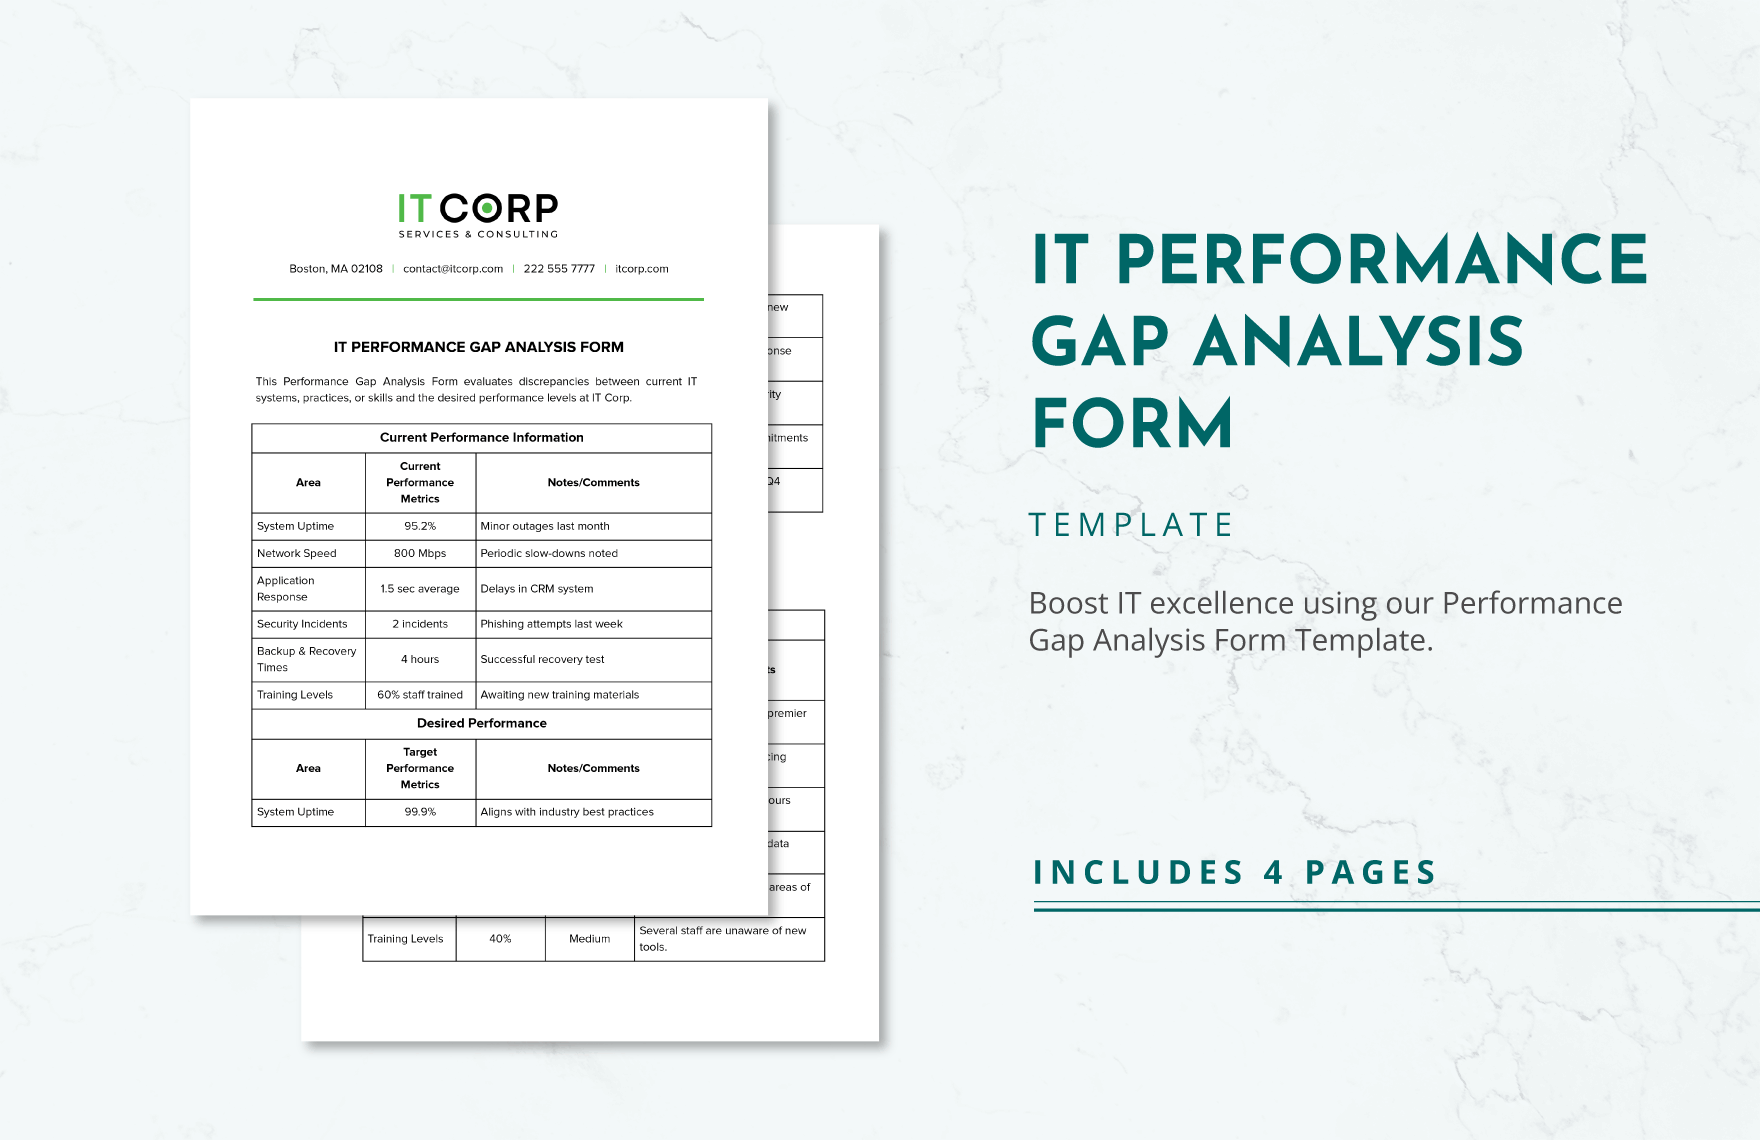 IT Performance Gap Analysis Form Template in Word, Google Docs, PDF